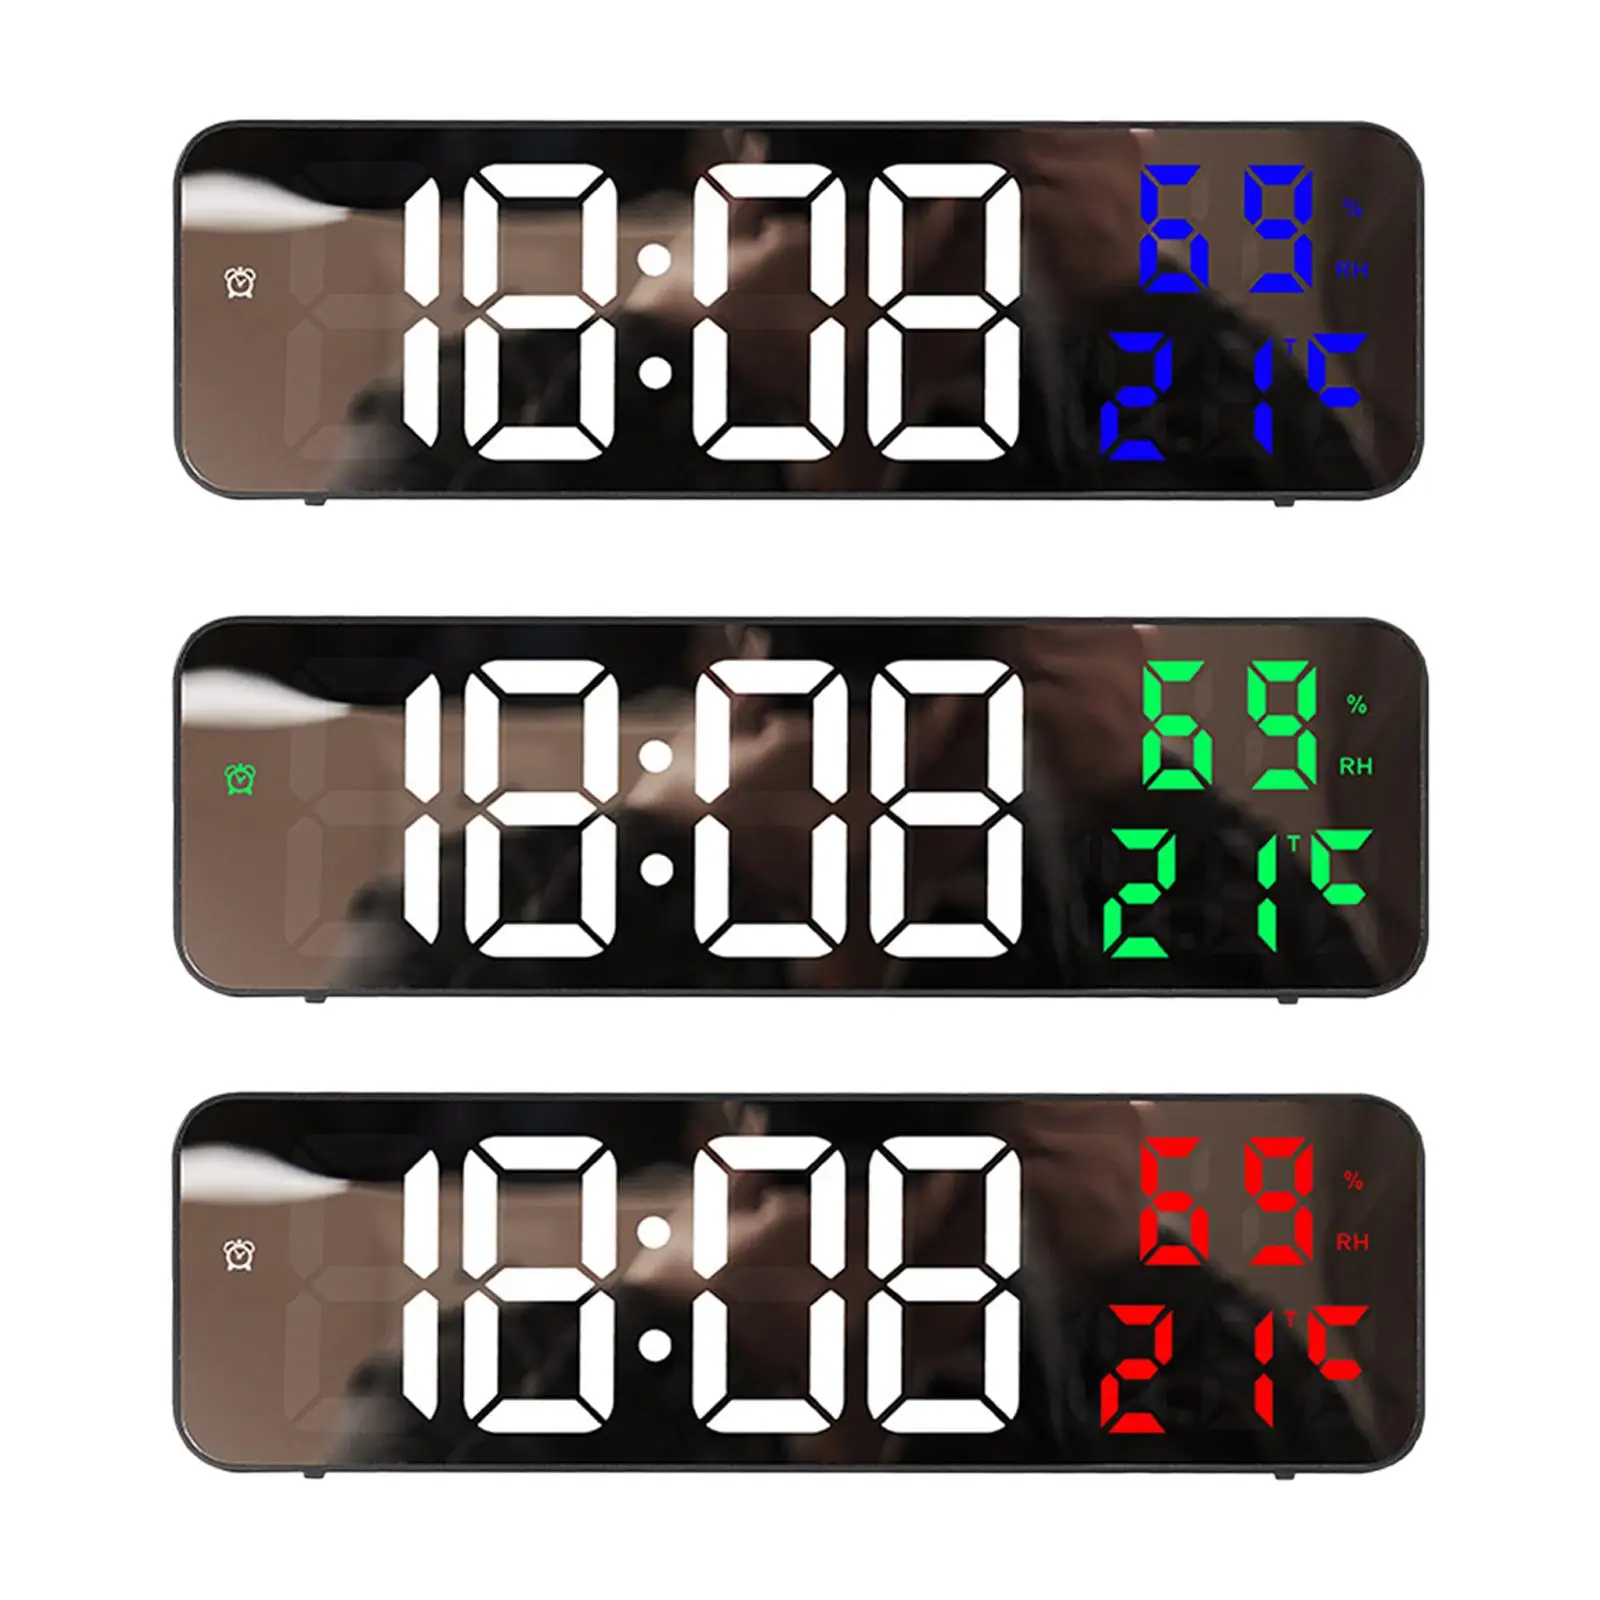 LED Alarm Clock LED Display Temperature Meter Hygrometer 12/24H Wall Mounted Digital Desktop Clock Watch for Office Bedroom Home